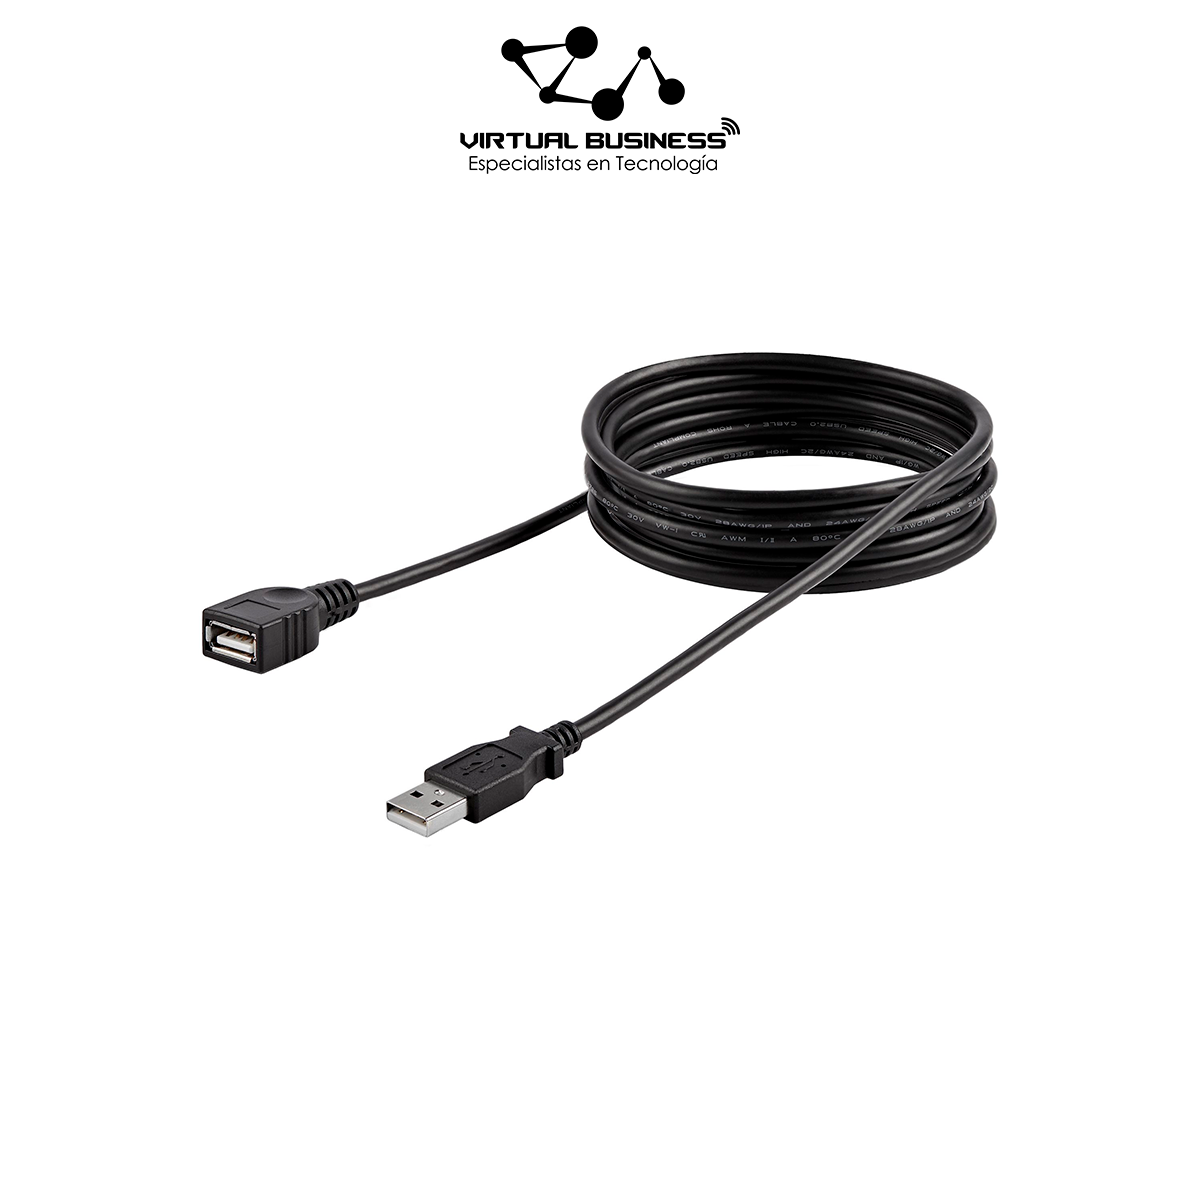 Canberra Pisoteando Frustrante Cable Extensor USB 2.0 - Macho a Hembra USB - 5M | Virtual Business Cusco